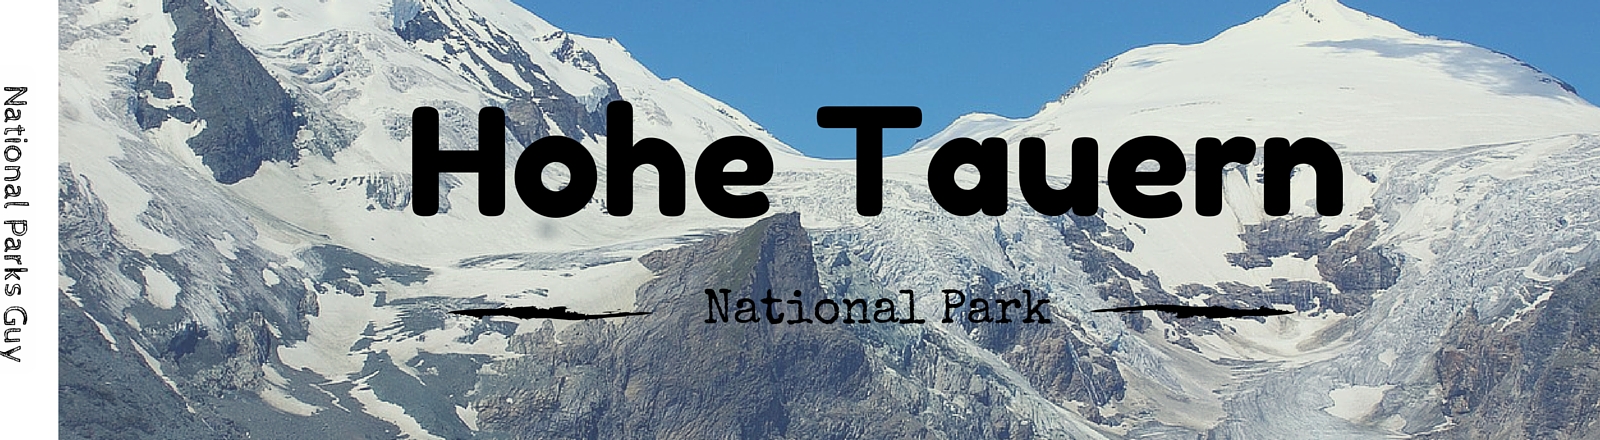 Hohe Tauern National Park, Austria, National Parks Guy